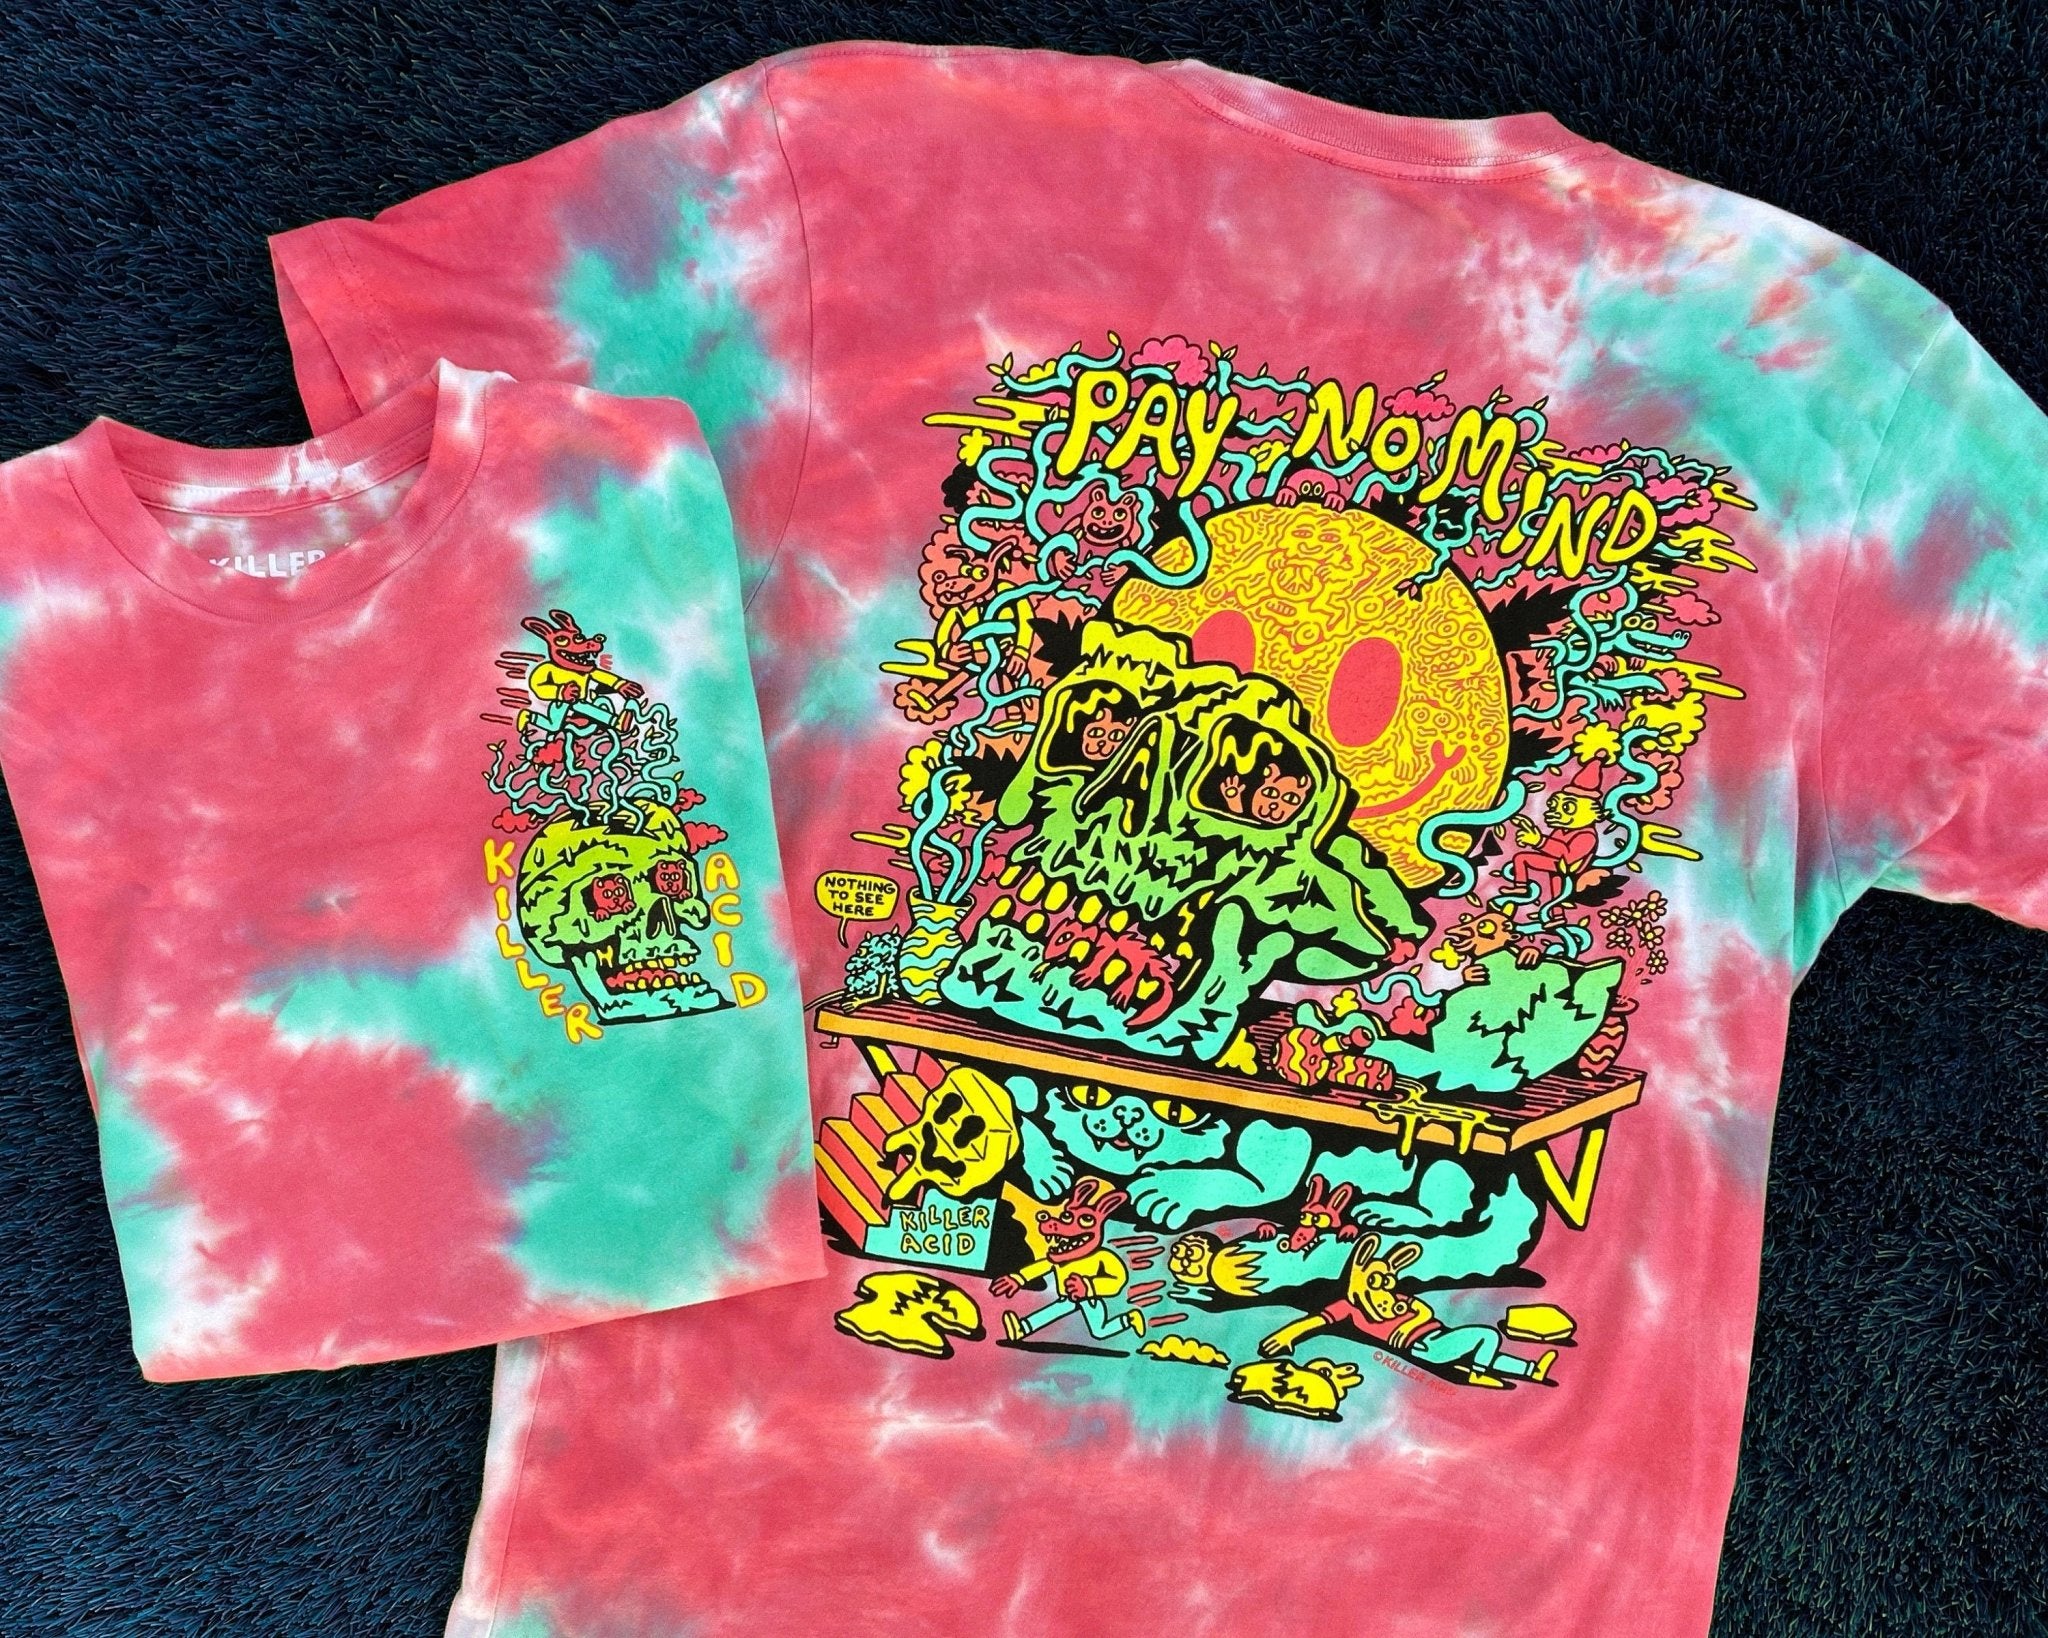 Pay No Mind Cotton Candy Crystal Wash T-shirt – Killer Acid